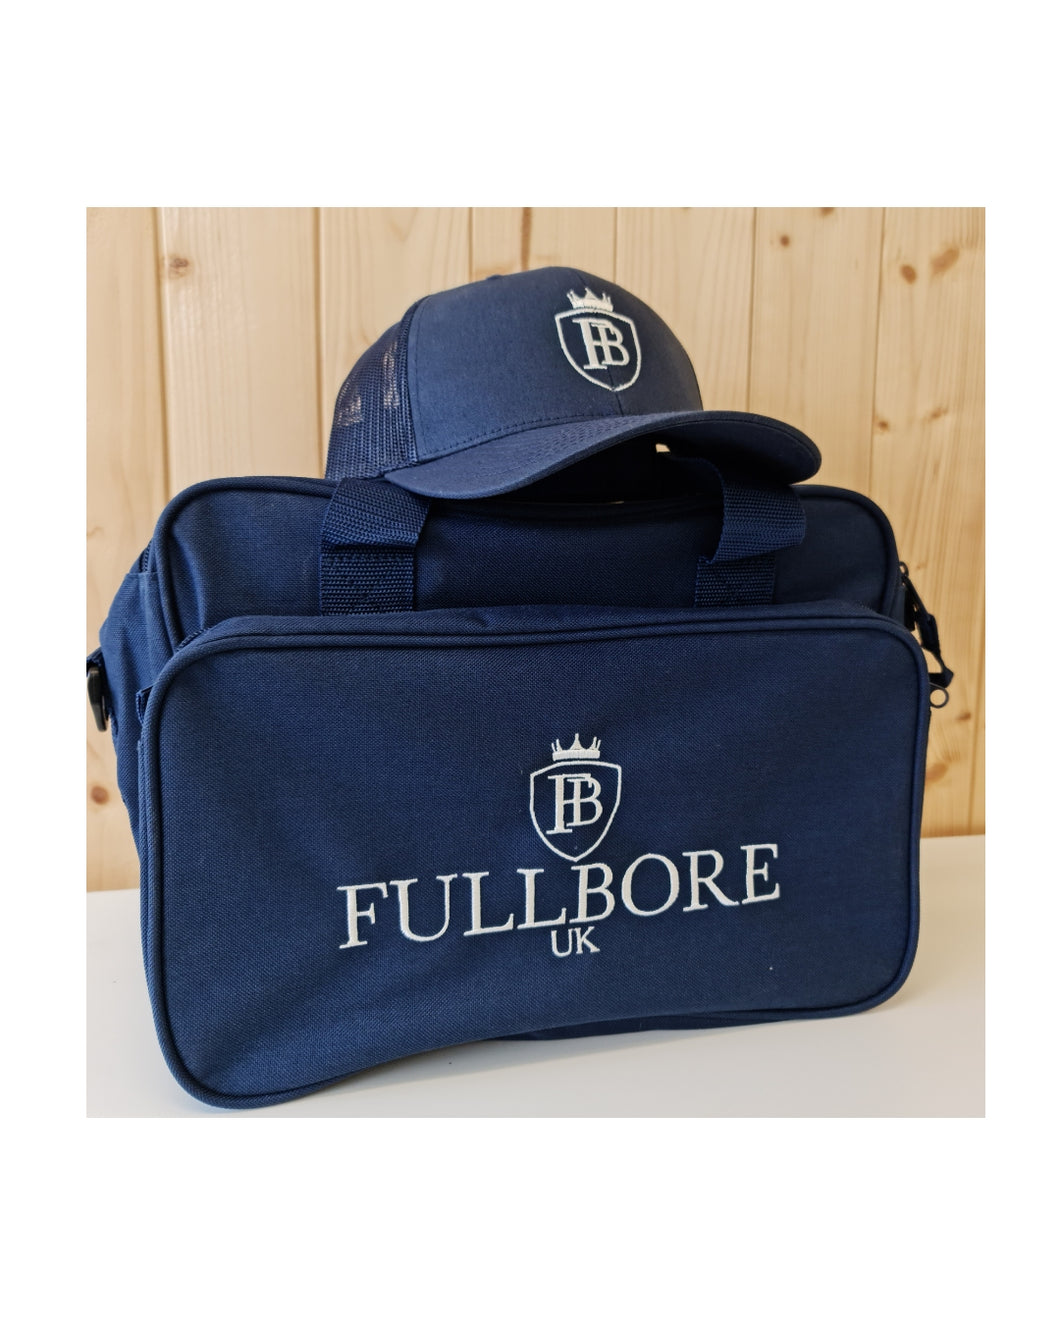 Fullbore Range Bag